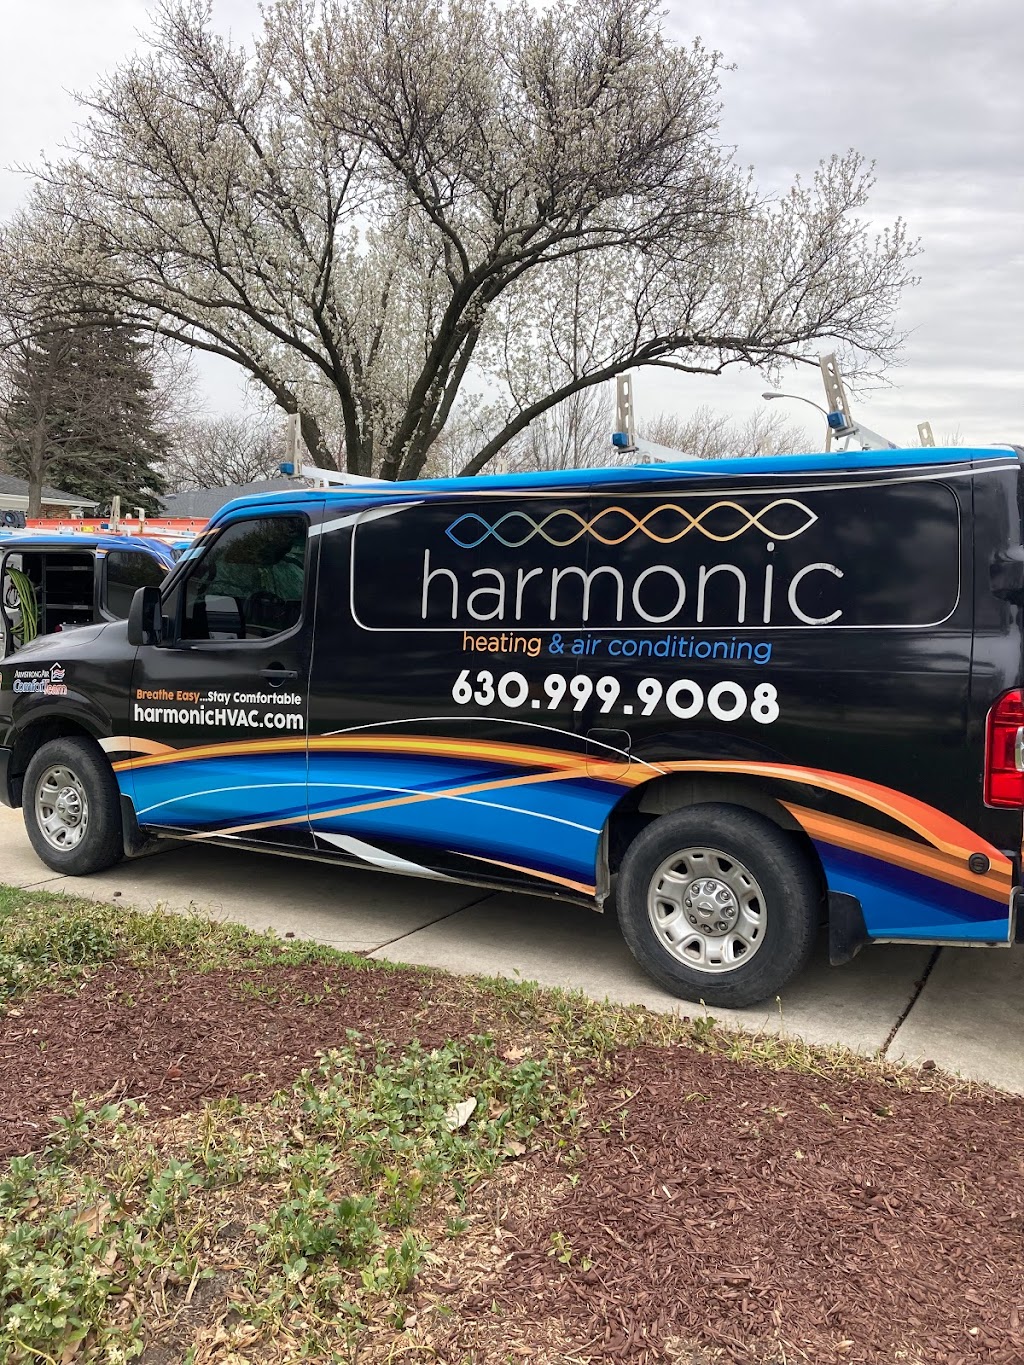 Harmonic Home Services - Handyman, Home Renovation | 10S187 Schoger Dr #55, Naperville, IL 60564 | Phone: (630) 551-8108